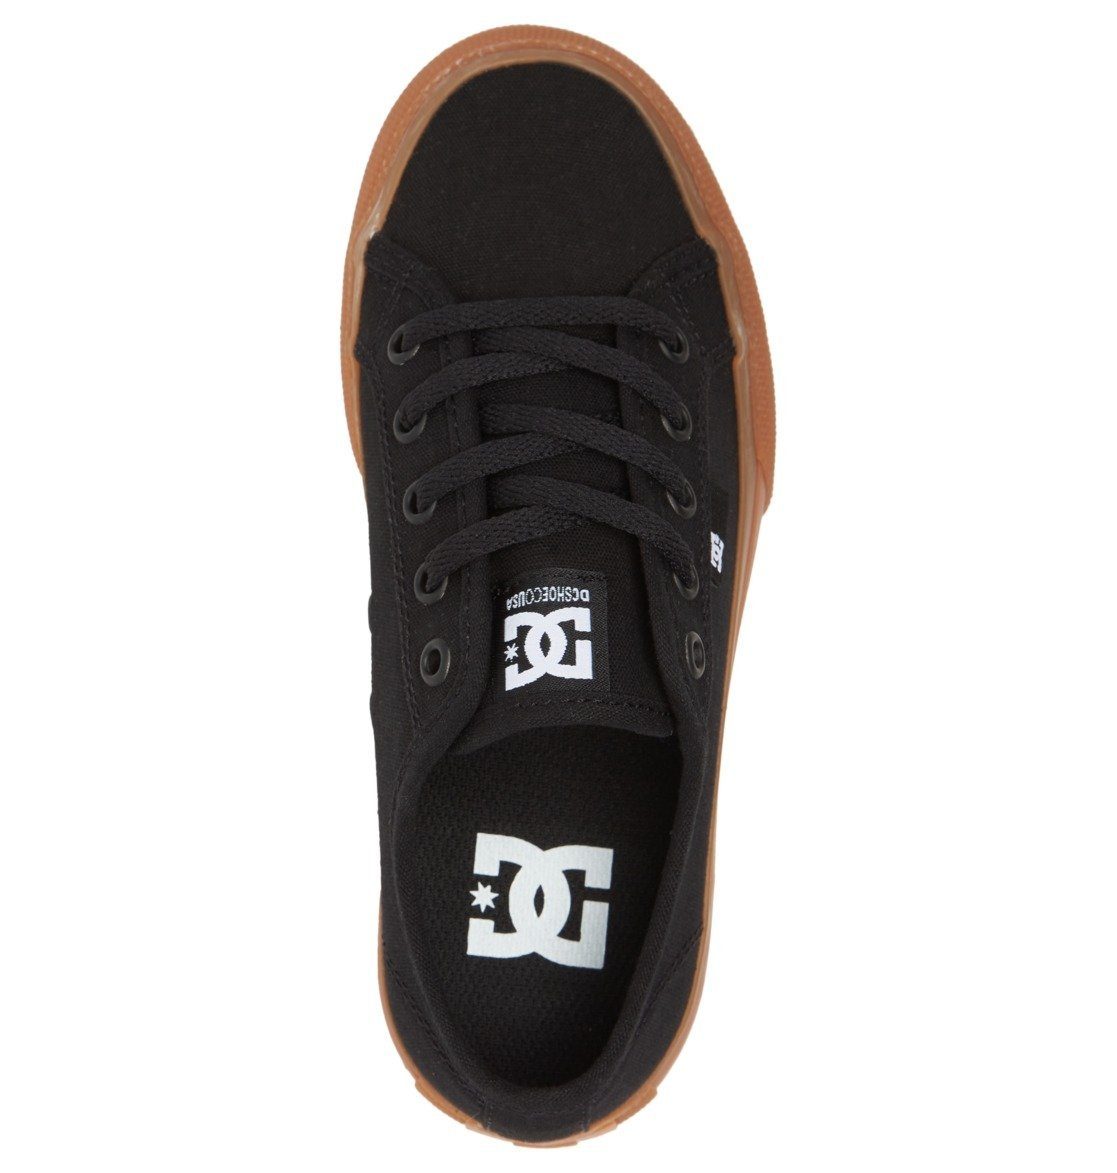 DC Shoes Manual Sneaker Black/Gum